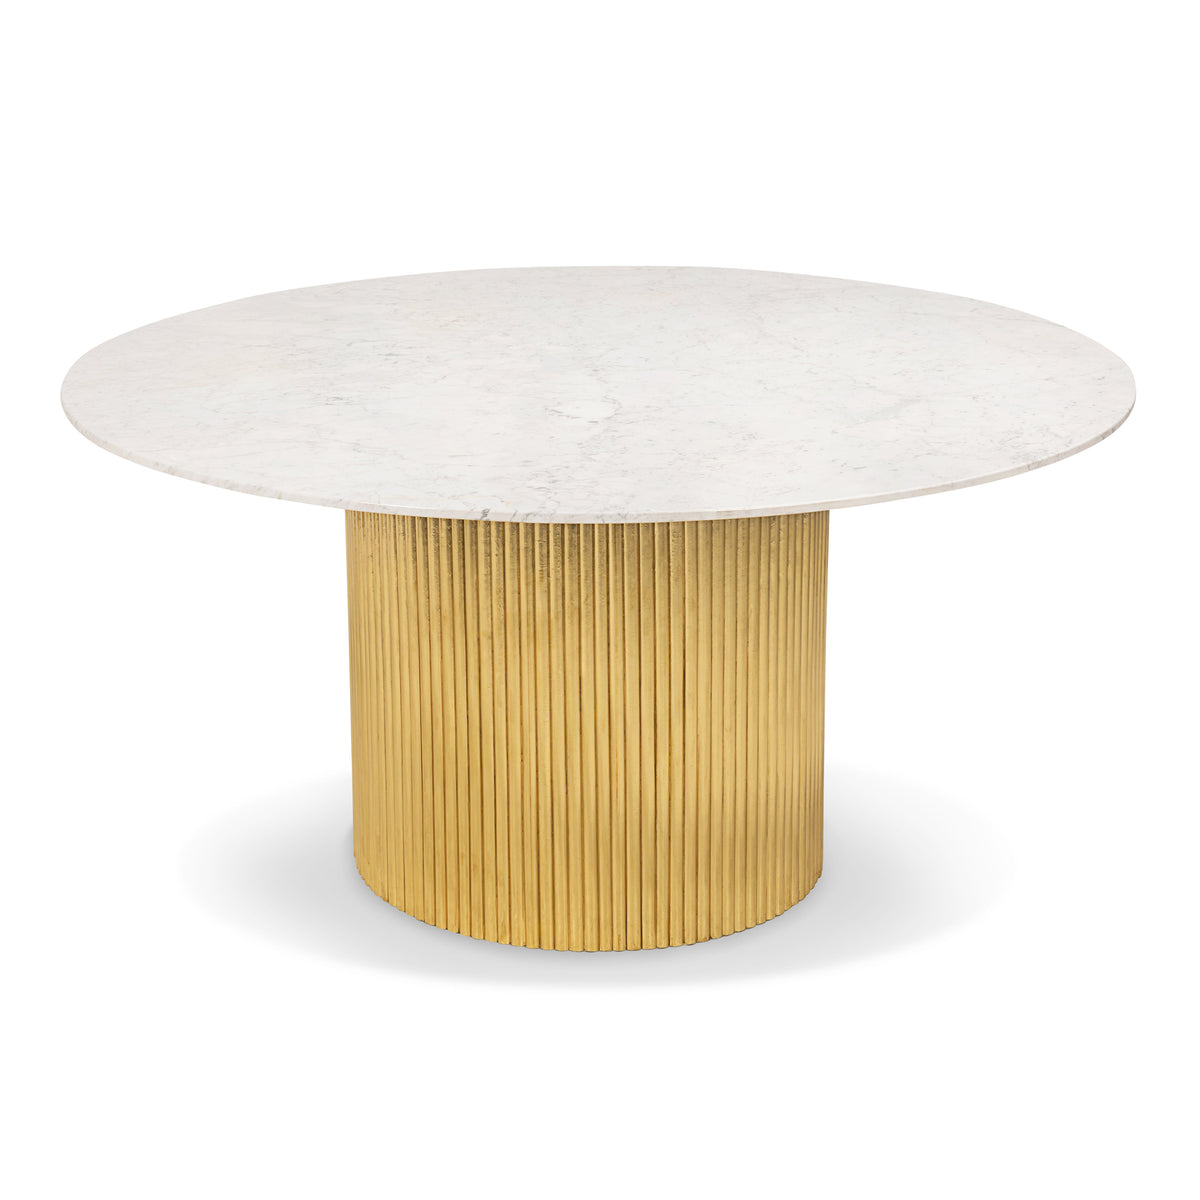 Ubud Dining Table in Shiny Brass Base